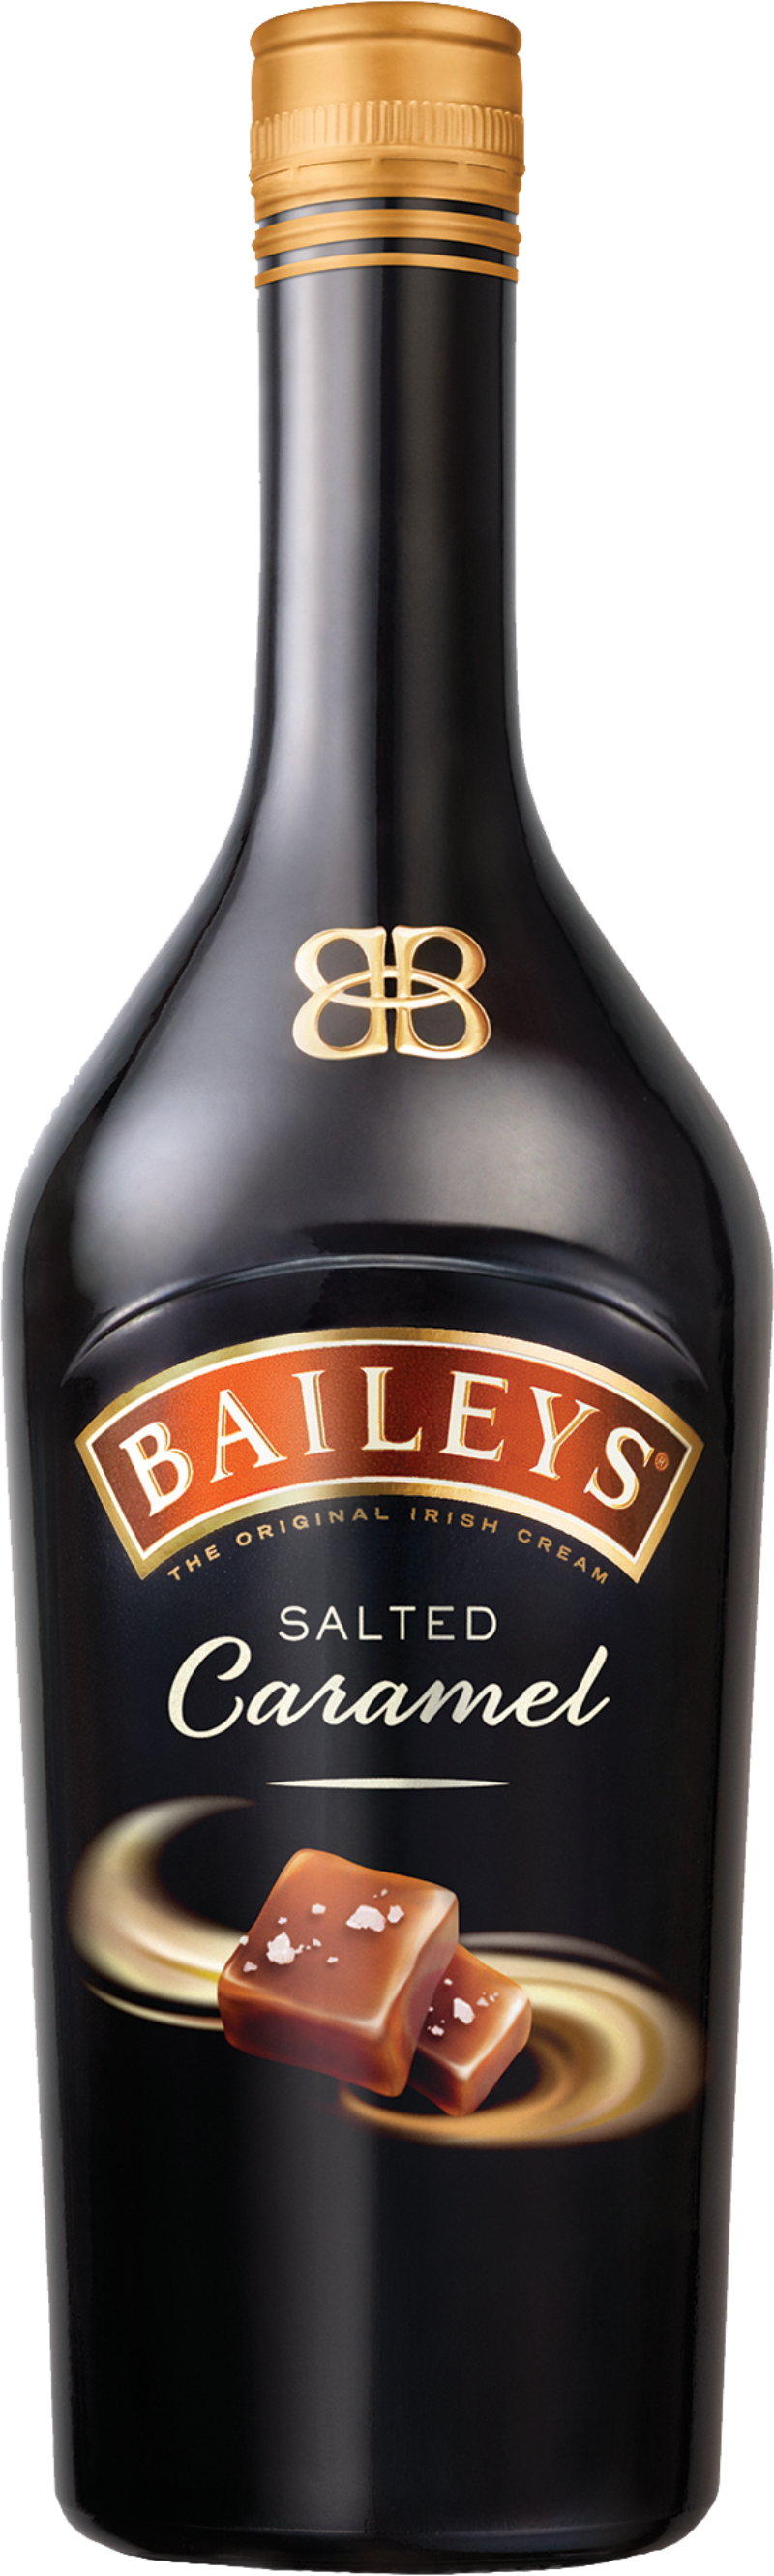 17% Caramel Salted cl 100 Baileys - vol